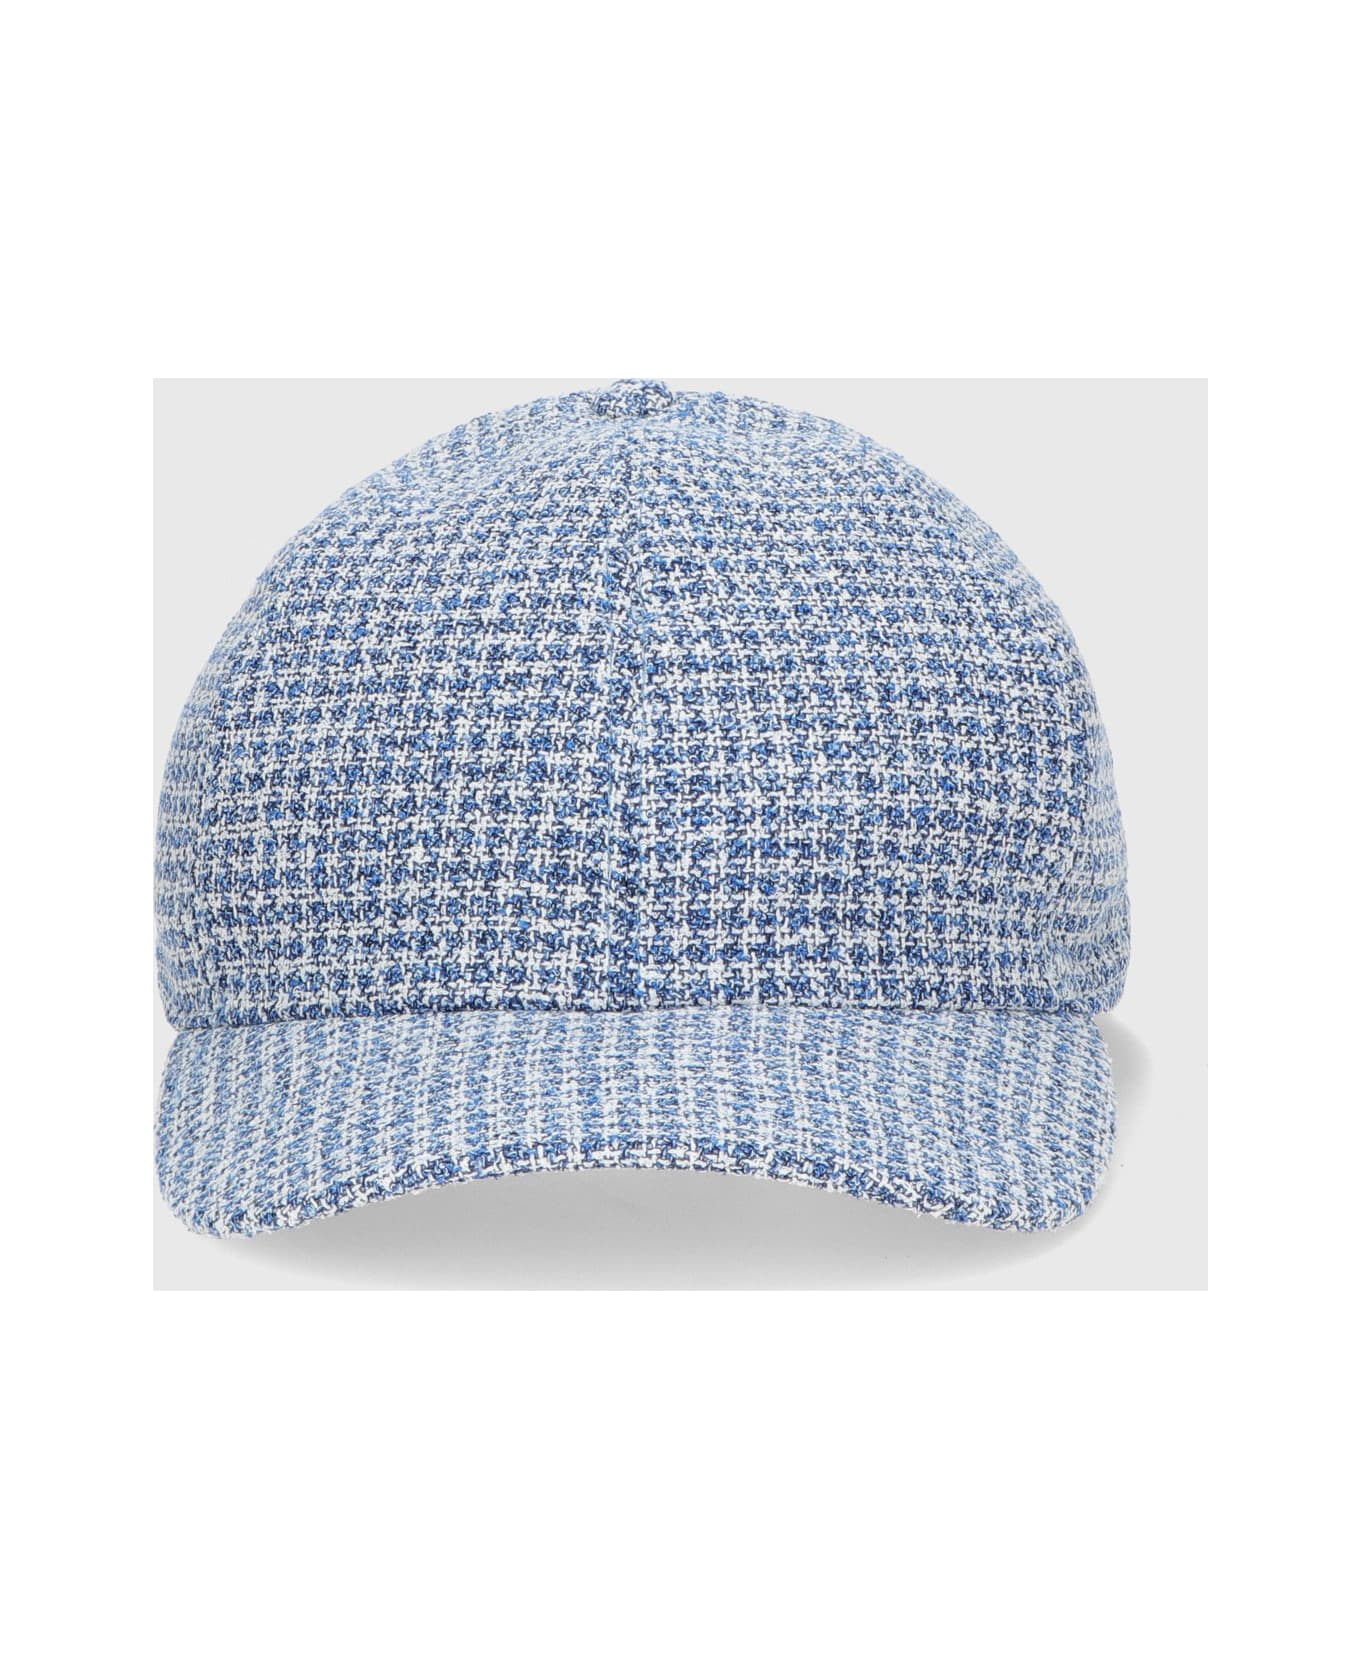 Borsalino Hiker Baseball Cap - HOUNDSTOOTH BLUE/WHITE